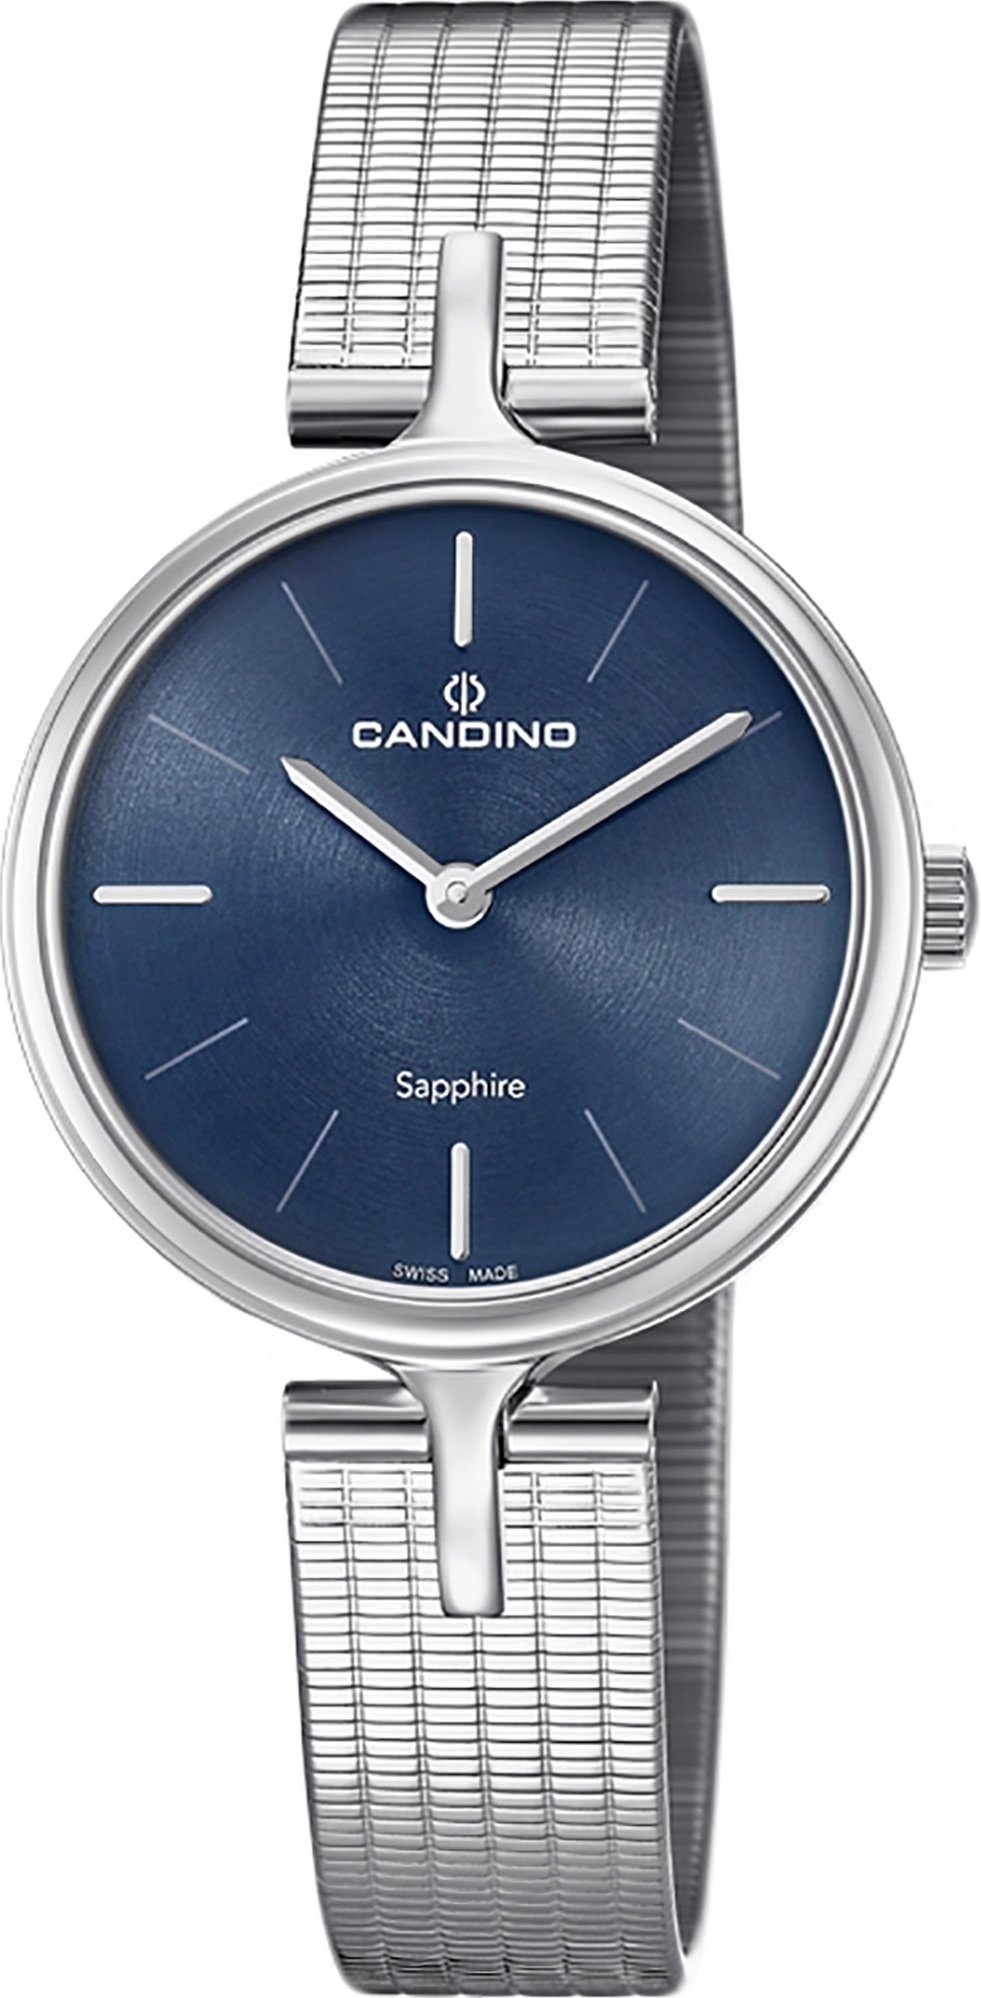 Candino Quarzuhr Candino C4641/2, Edelstahlarmband Analog Damen Damen Uhr silber, Armbanduhr Fashion rund